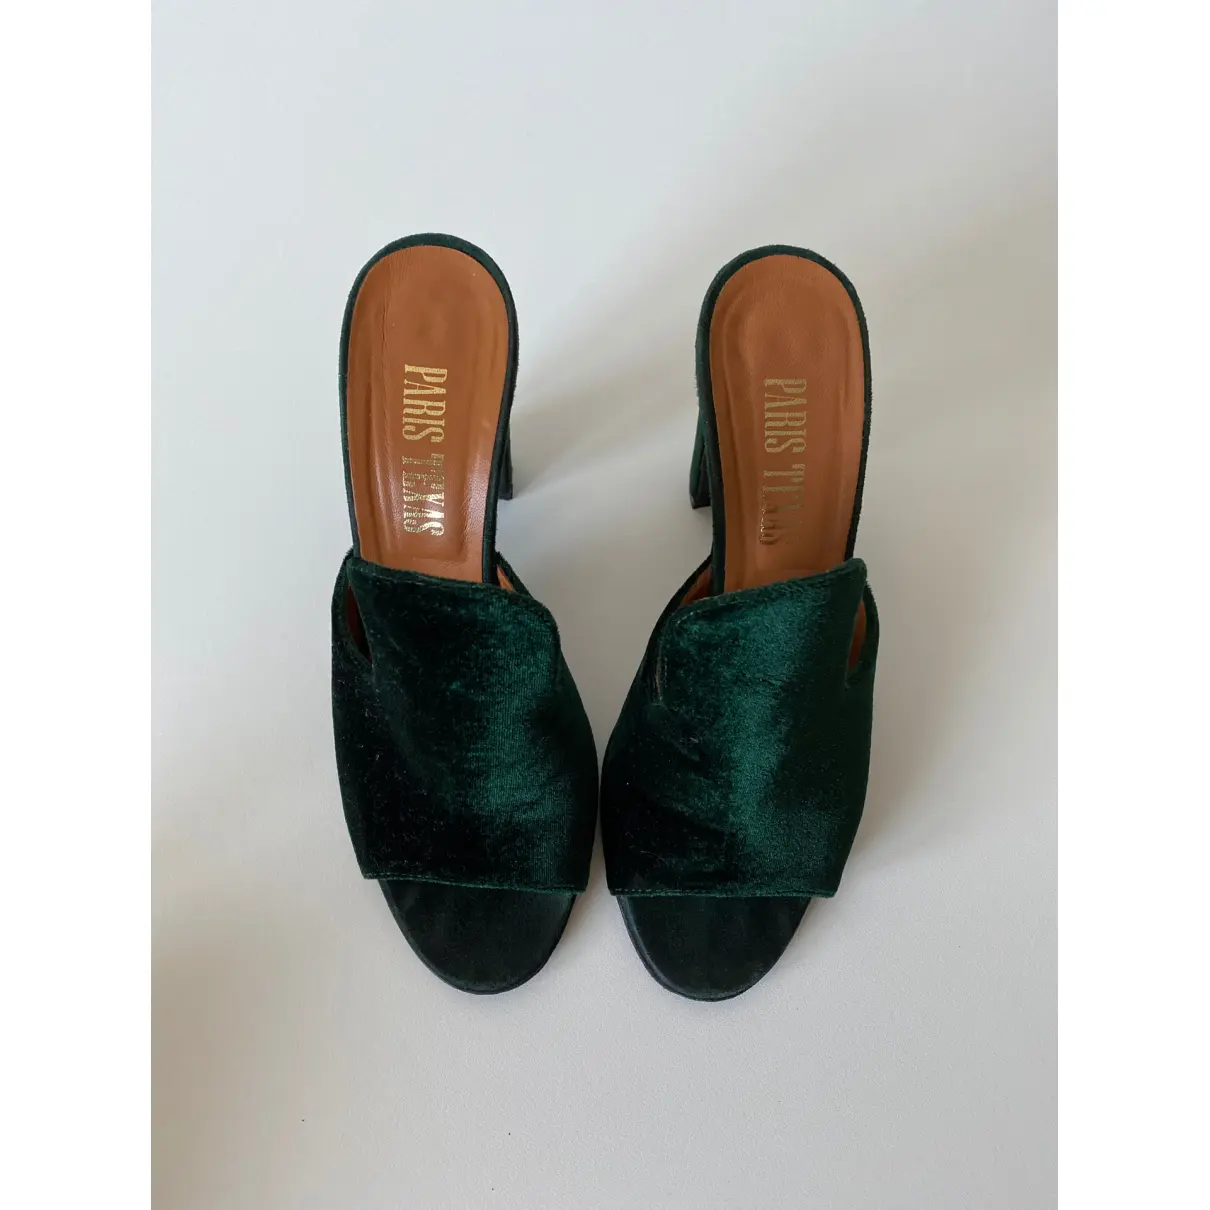 Buy PARIS TEXAS Velvet sandals online